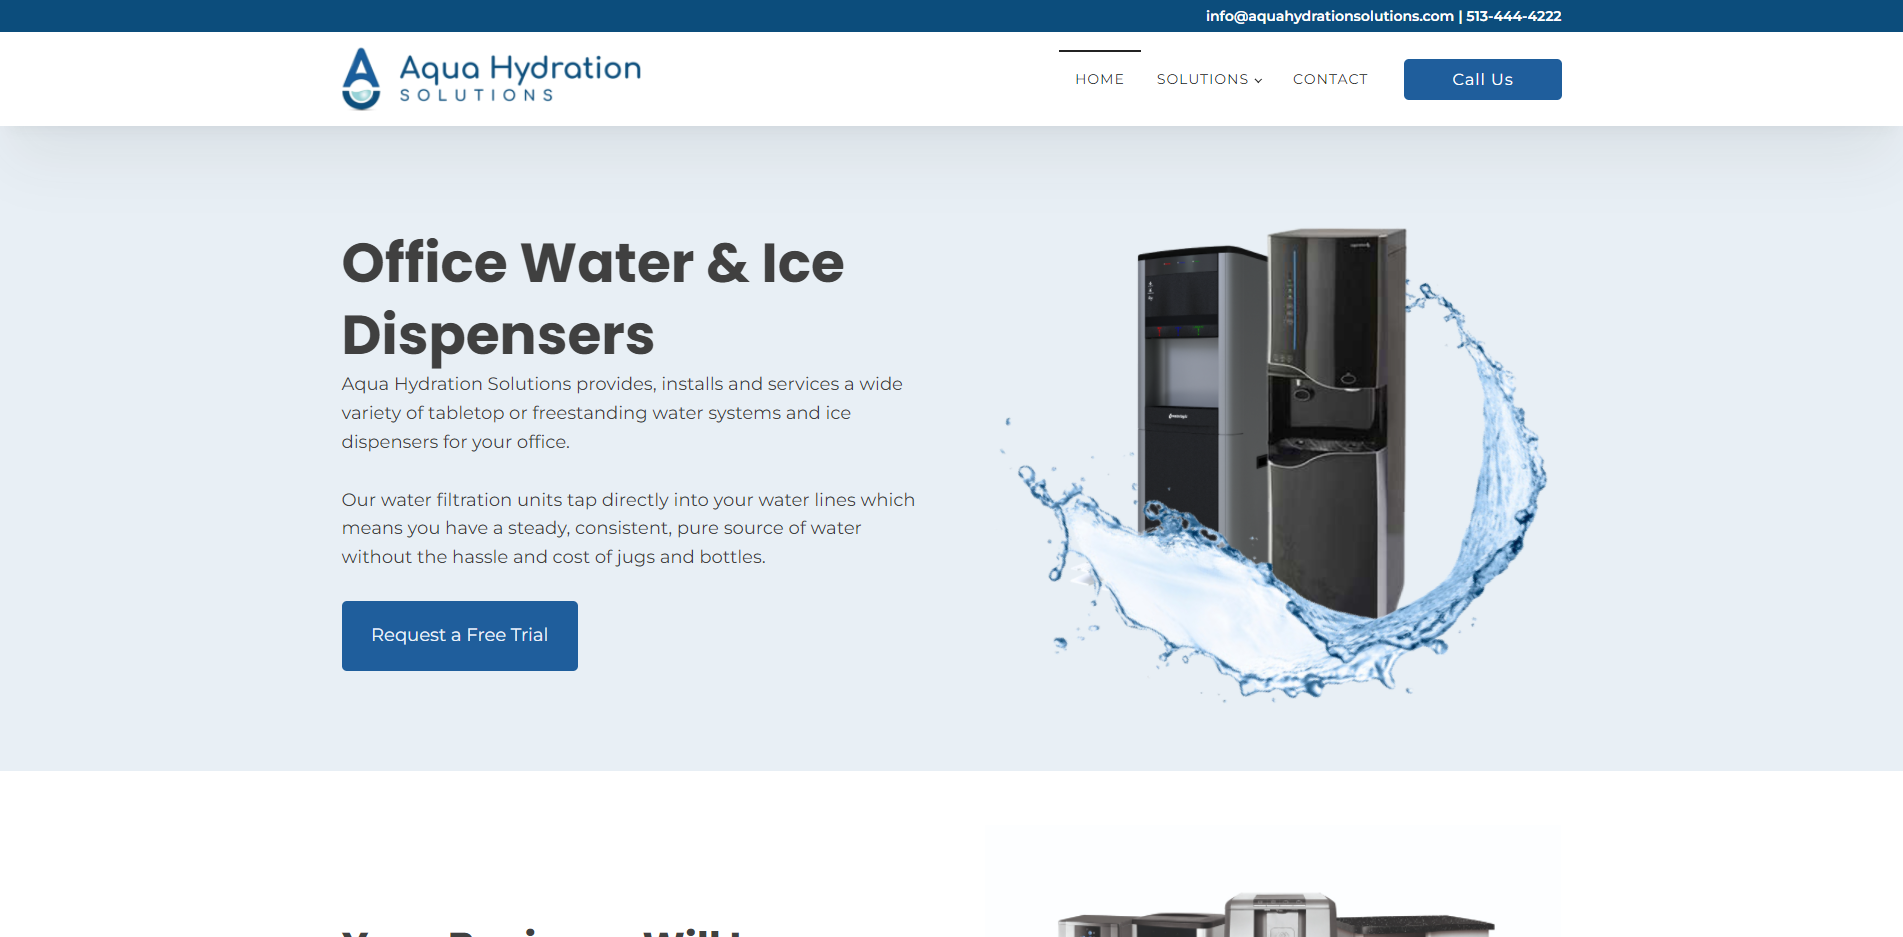 Aqua Hydration Solutions